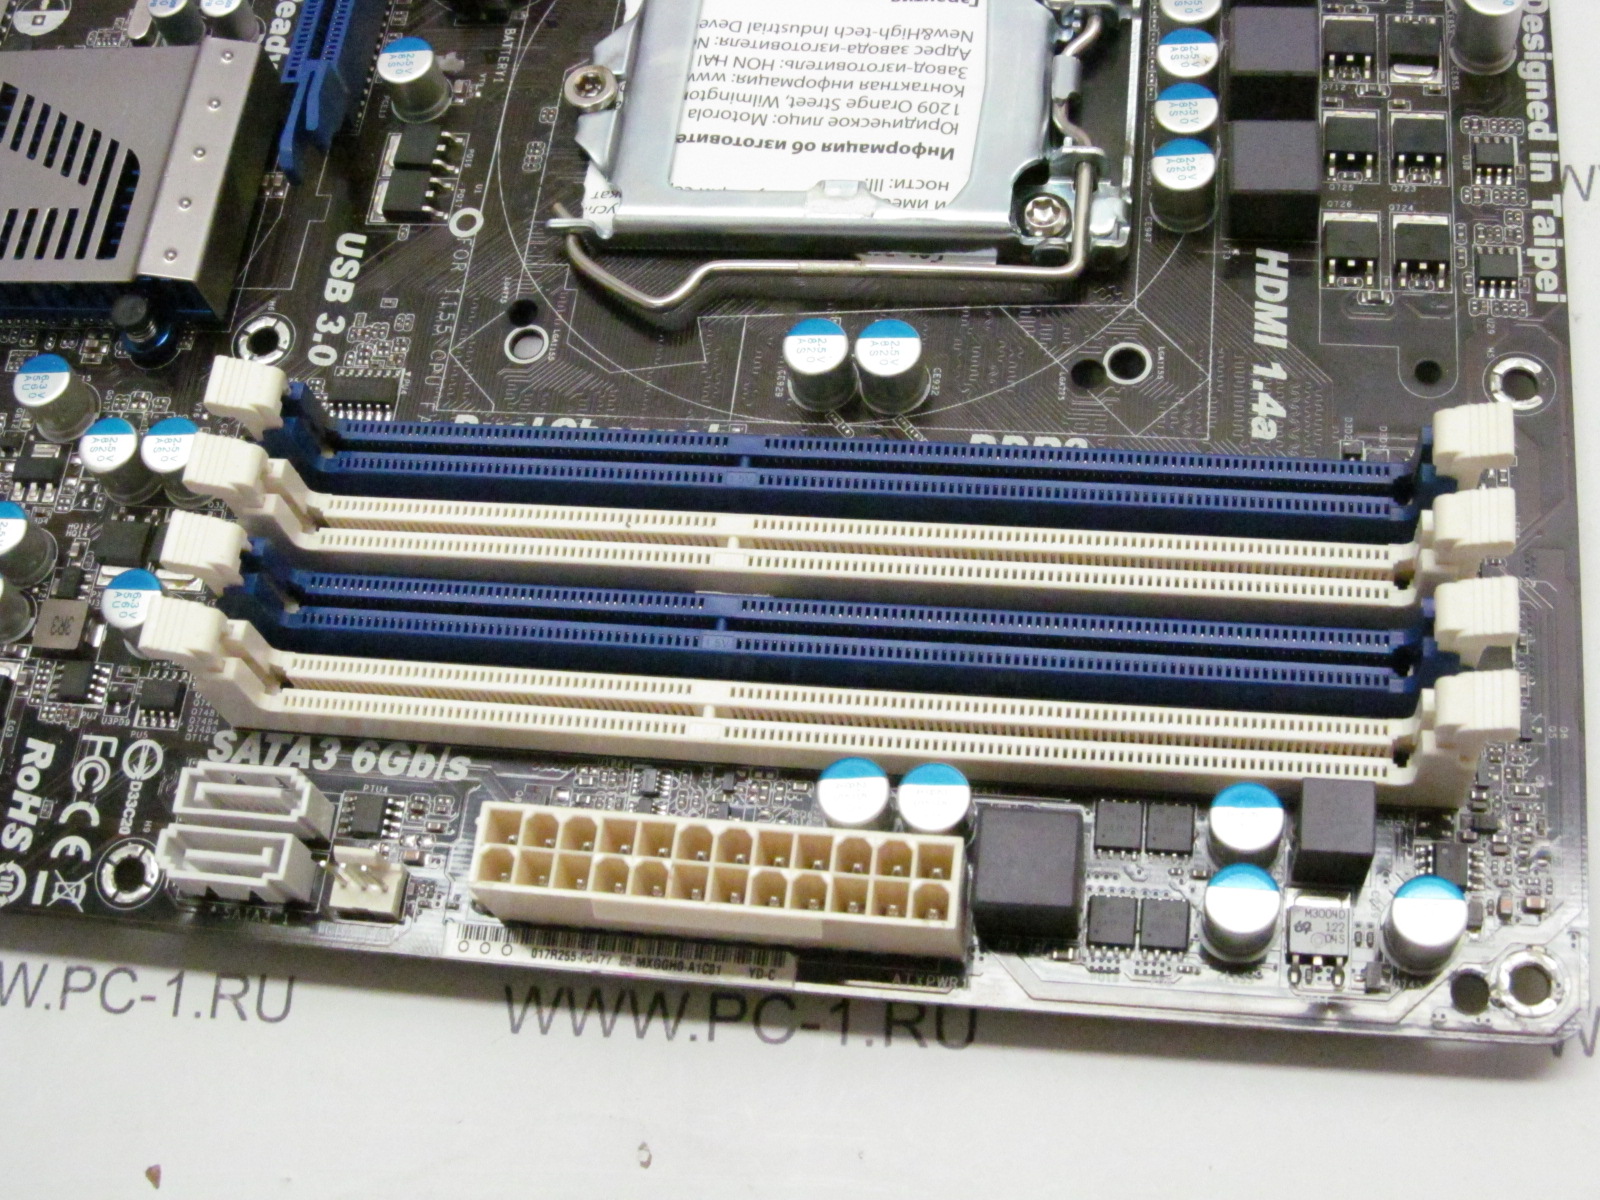 Материнская плата MB ASRock H67M-GE /Socket 1155 /4xDDR3 /PCI-E x16 /PCI /2xPCI-E x1 /5xSATA (2x SATA-III 6Gb/s) /6xUSB (2xUSB 3.0) /HDMI /DVI /VGA /LAN /mATX /Заглушка